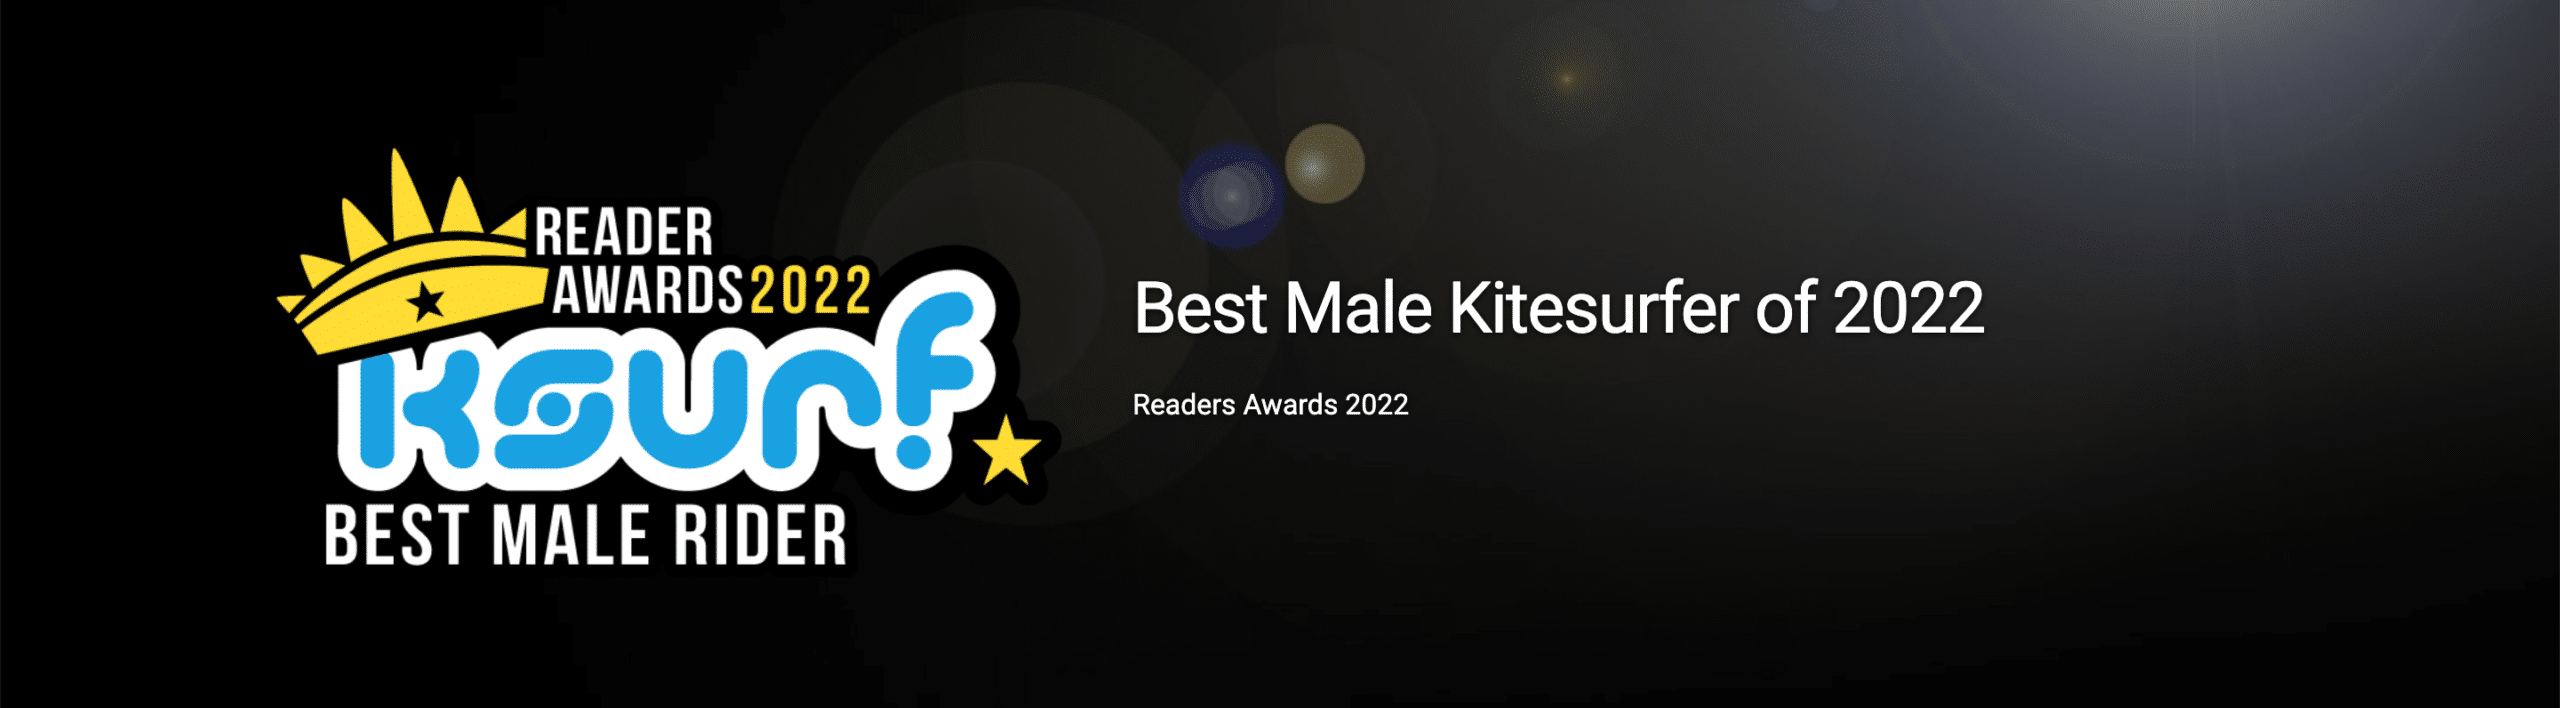 akdurablesupplyco-IKSurf AK Best Male Kitesurfer of 2022IKSurf x Tonic AwardsNews